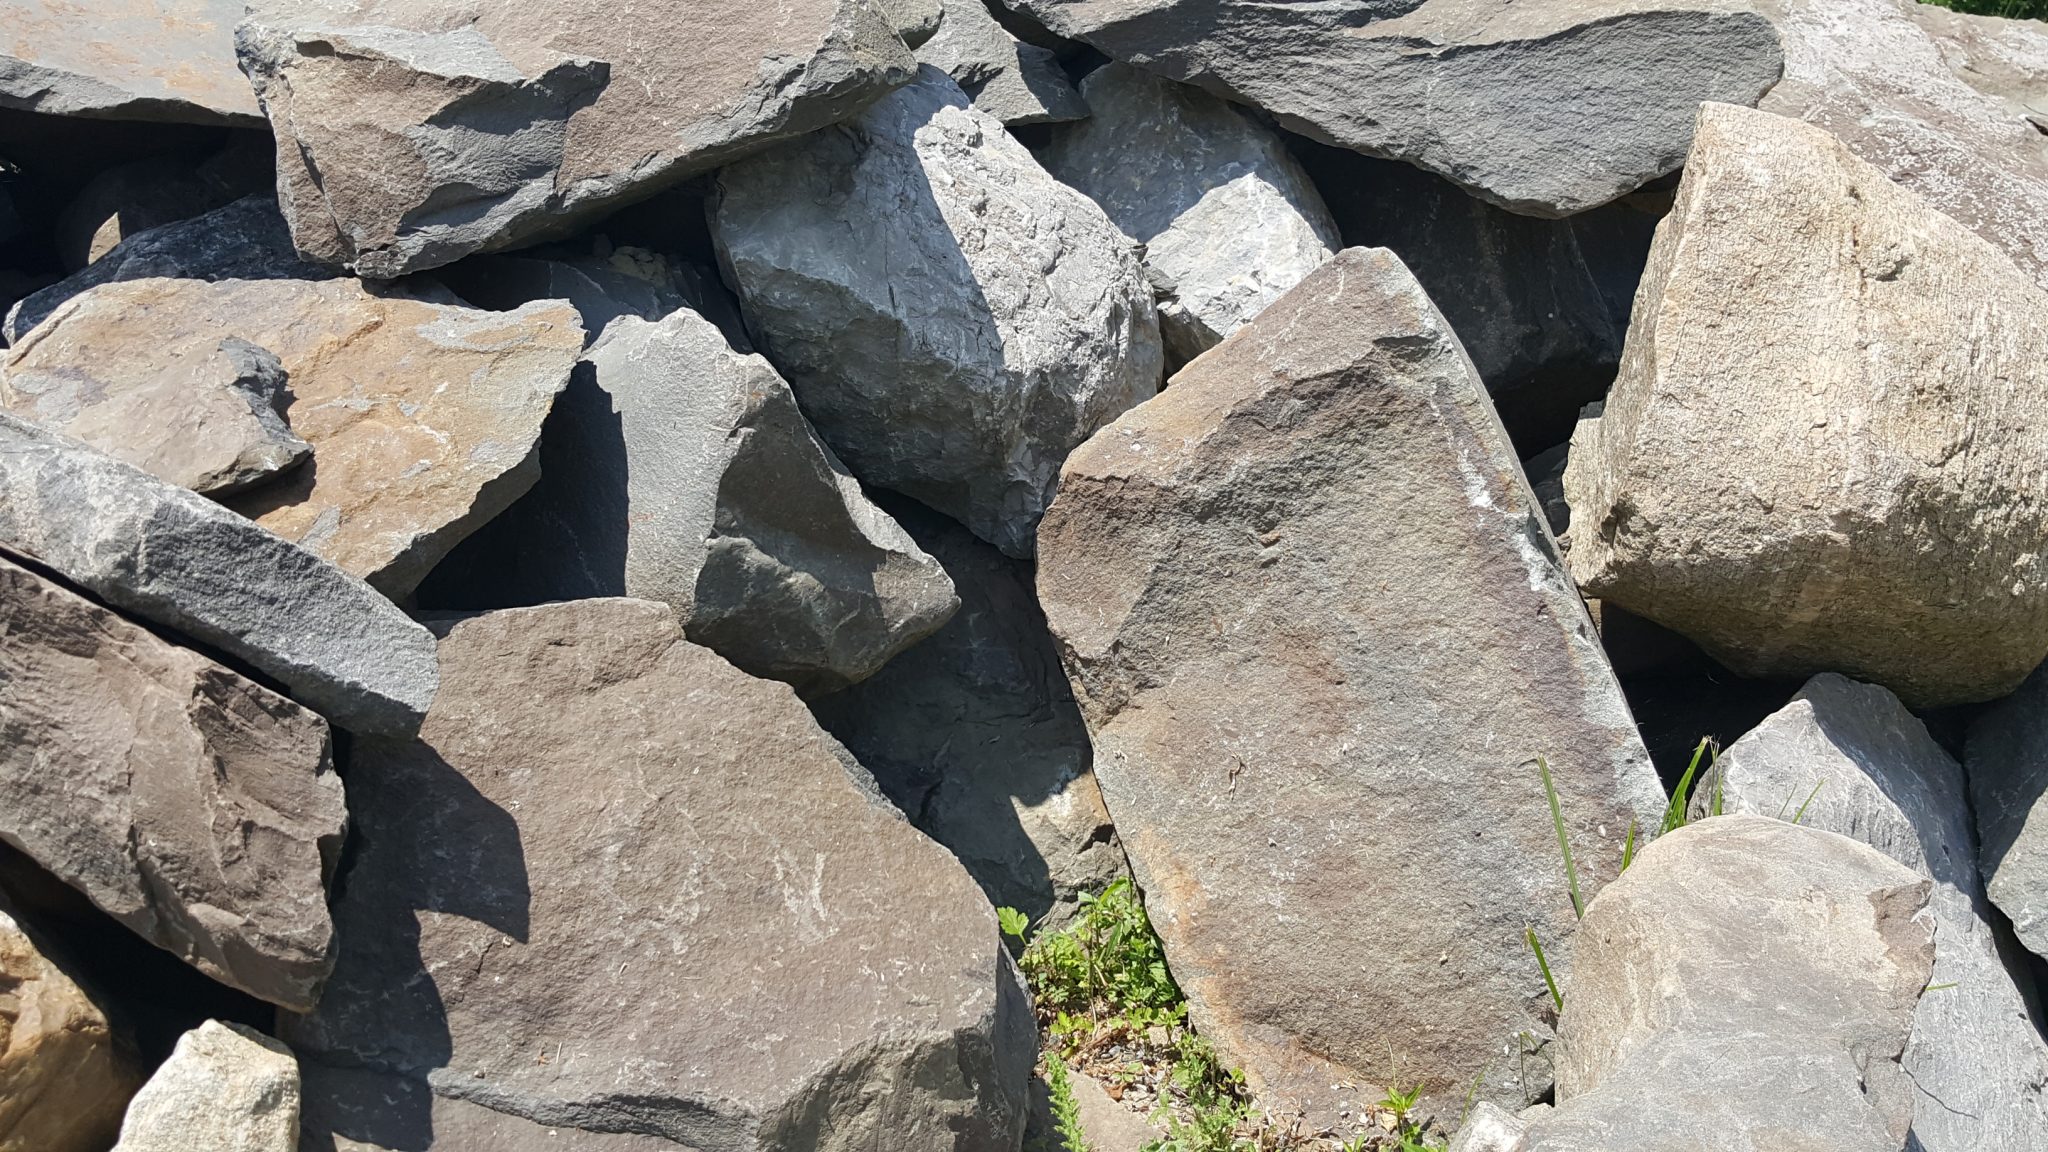 Assorted Boulders